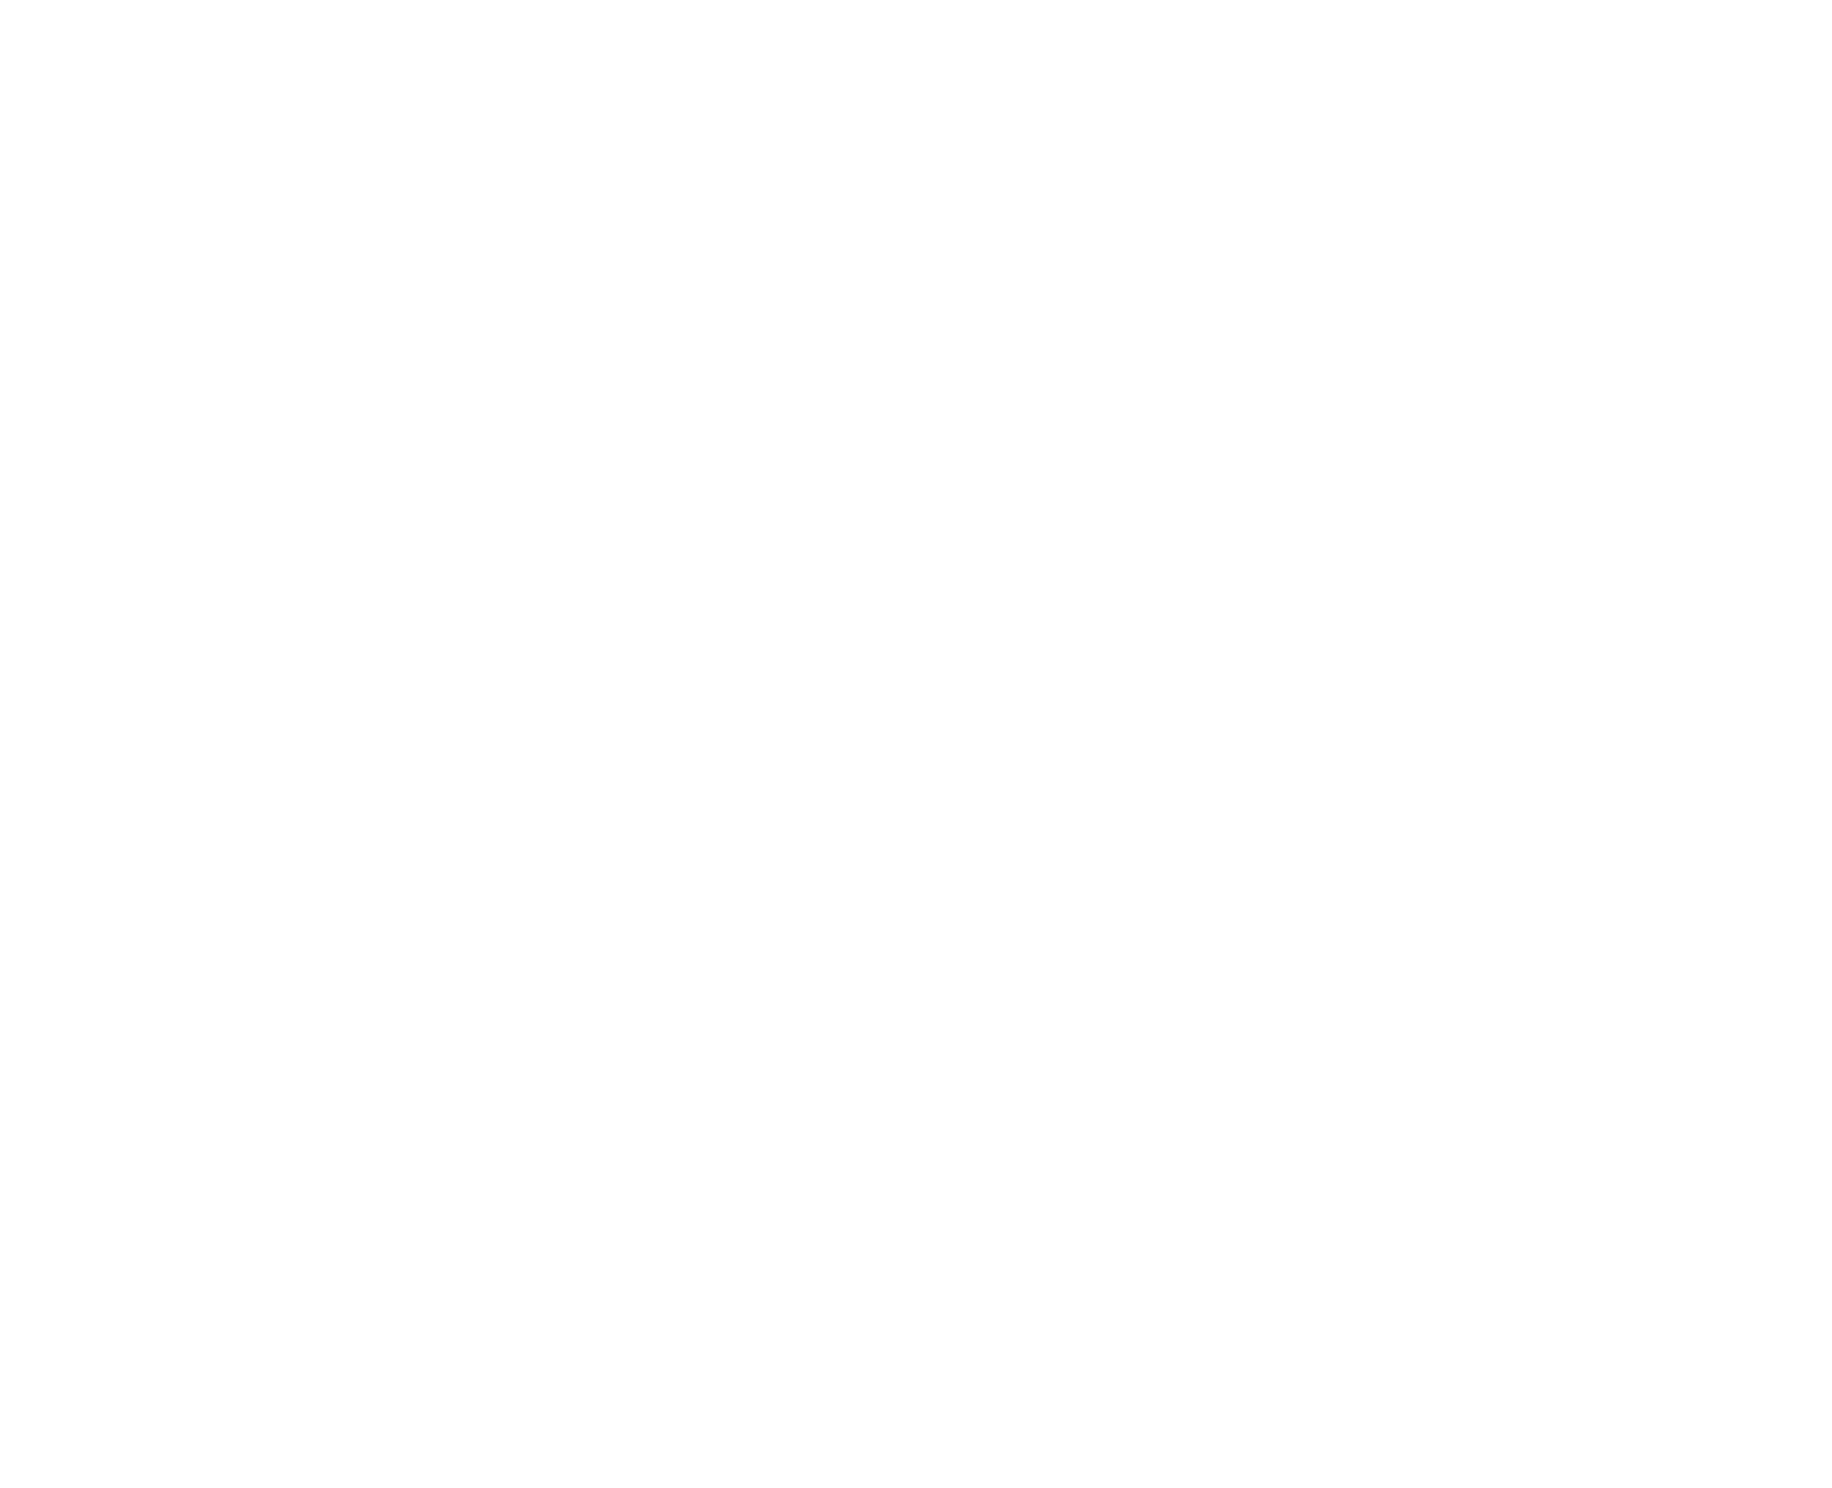 NEW CAMPSITE OPEN